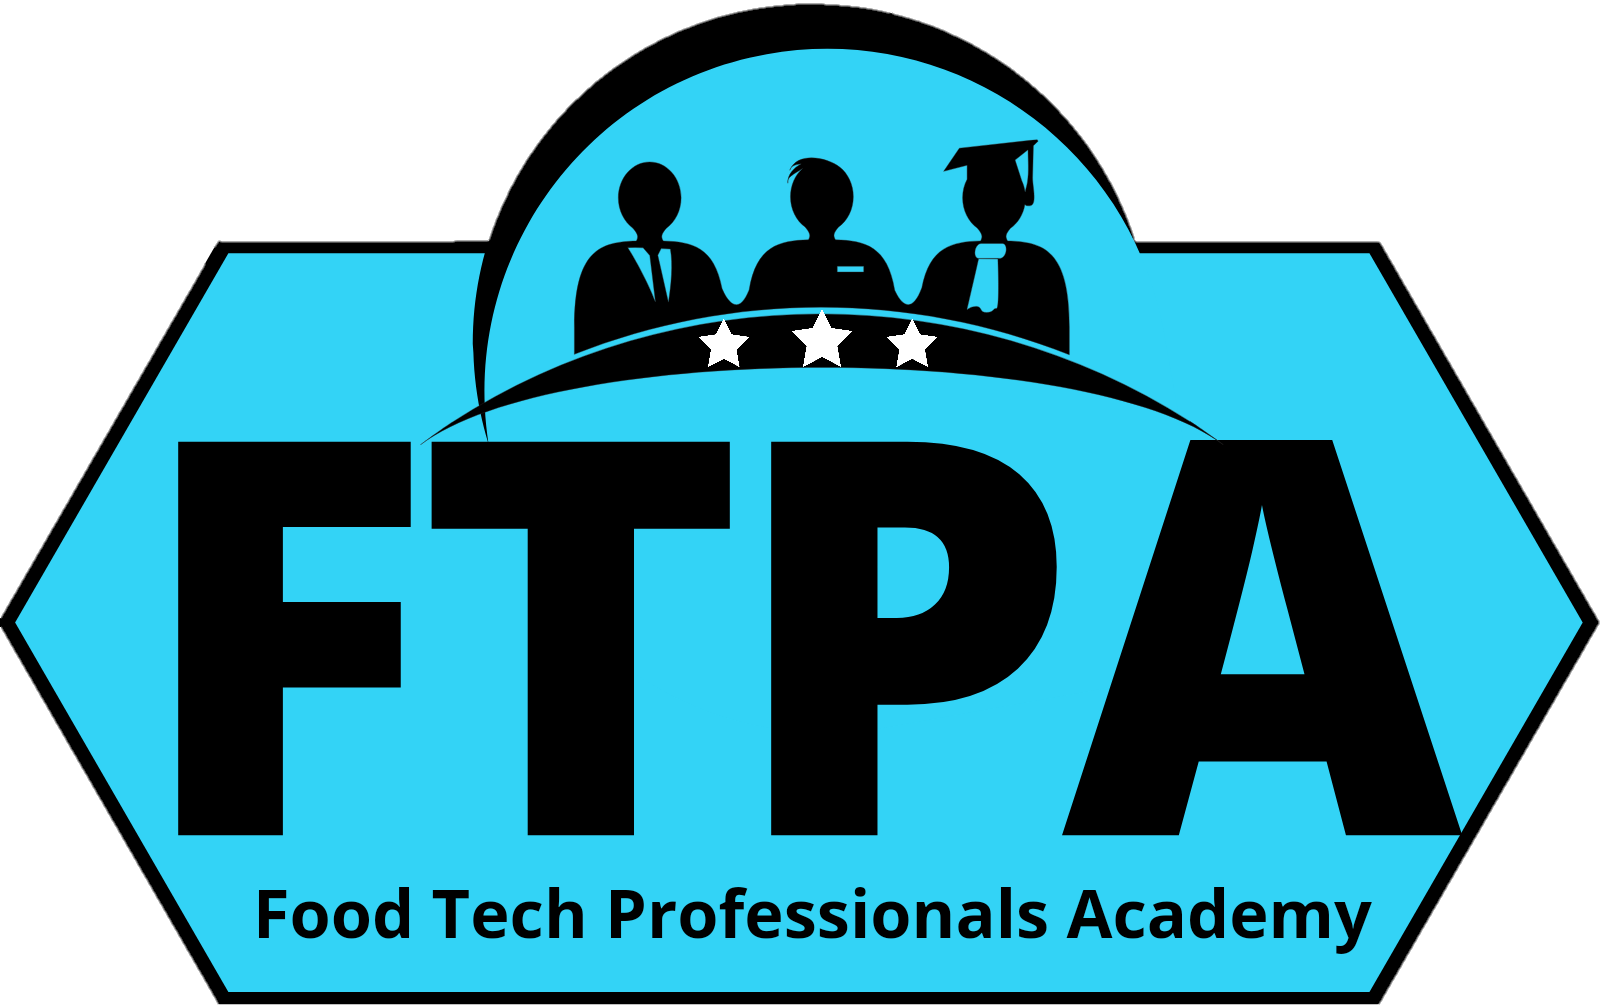 Food Tech Professional Academy